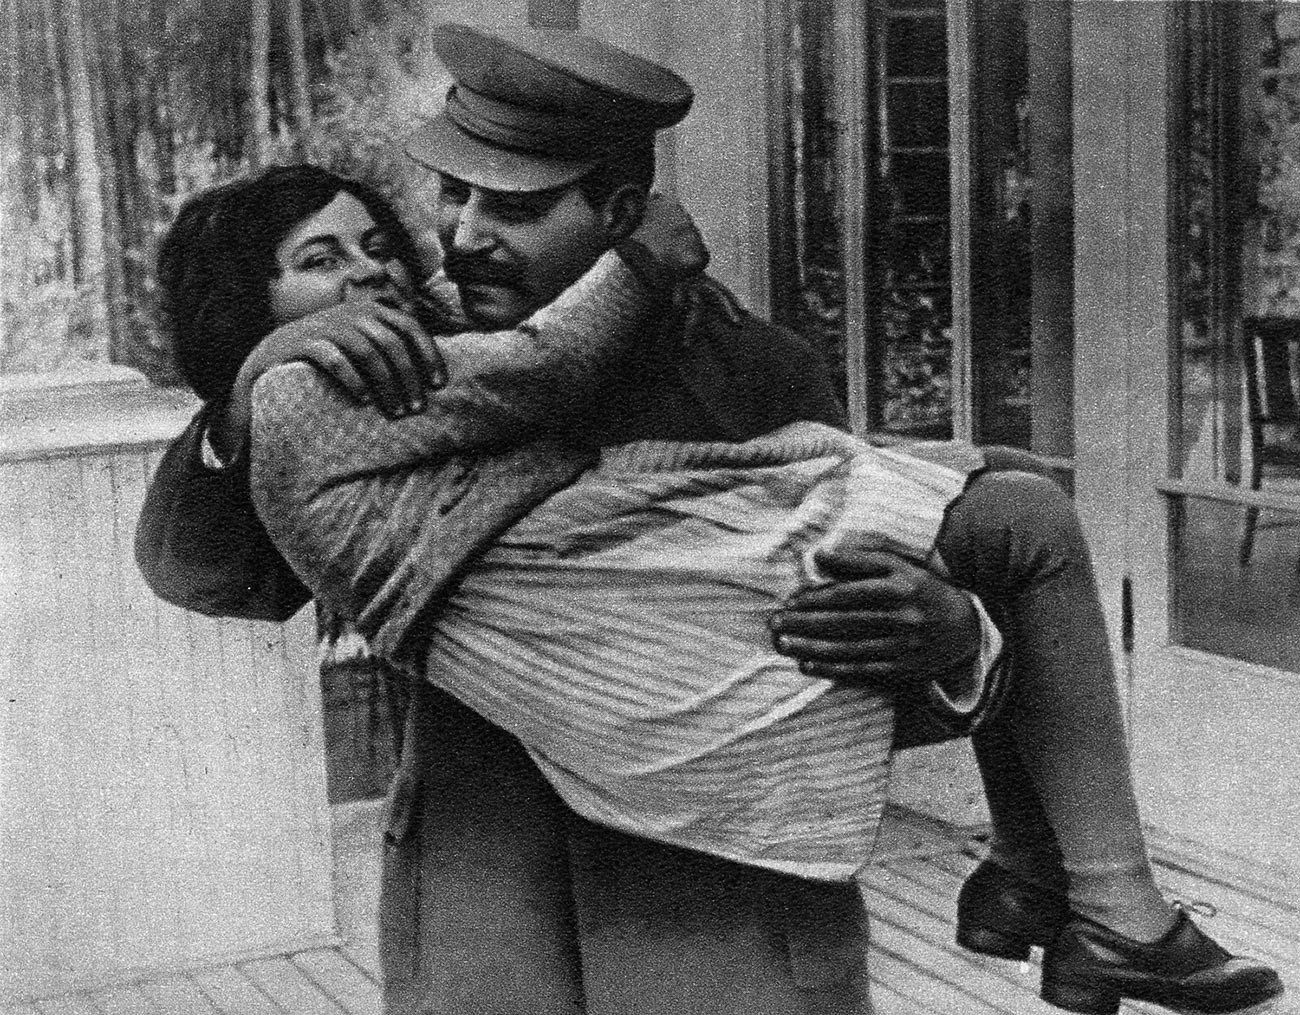 Joseph Stalin lifting his daughter Svetlana up with his both arms